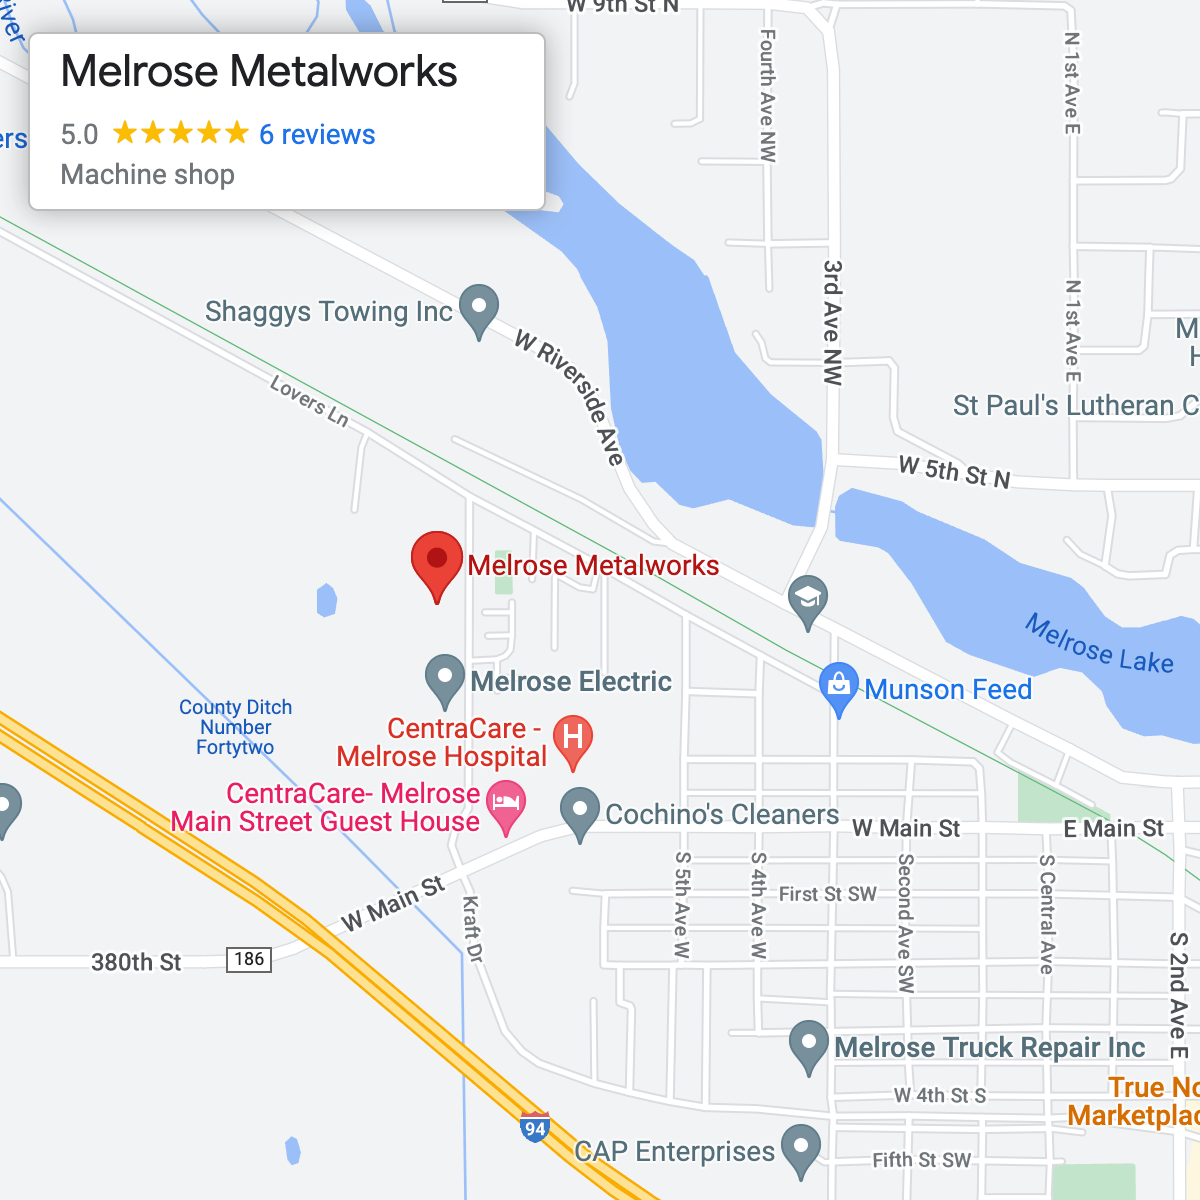 Melrose Metalworks in Minnesota